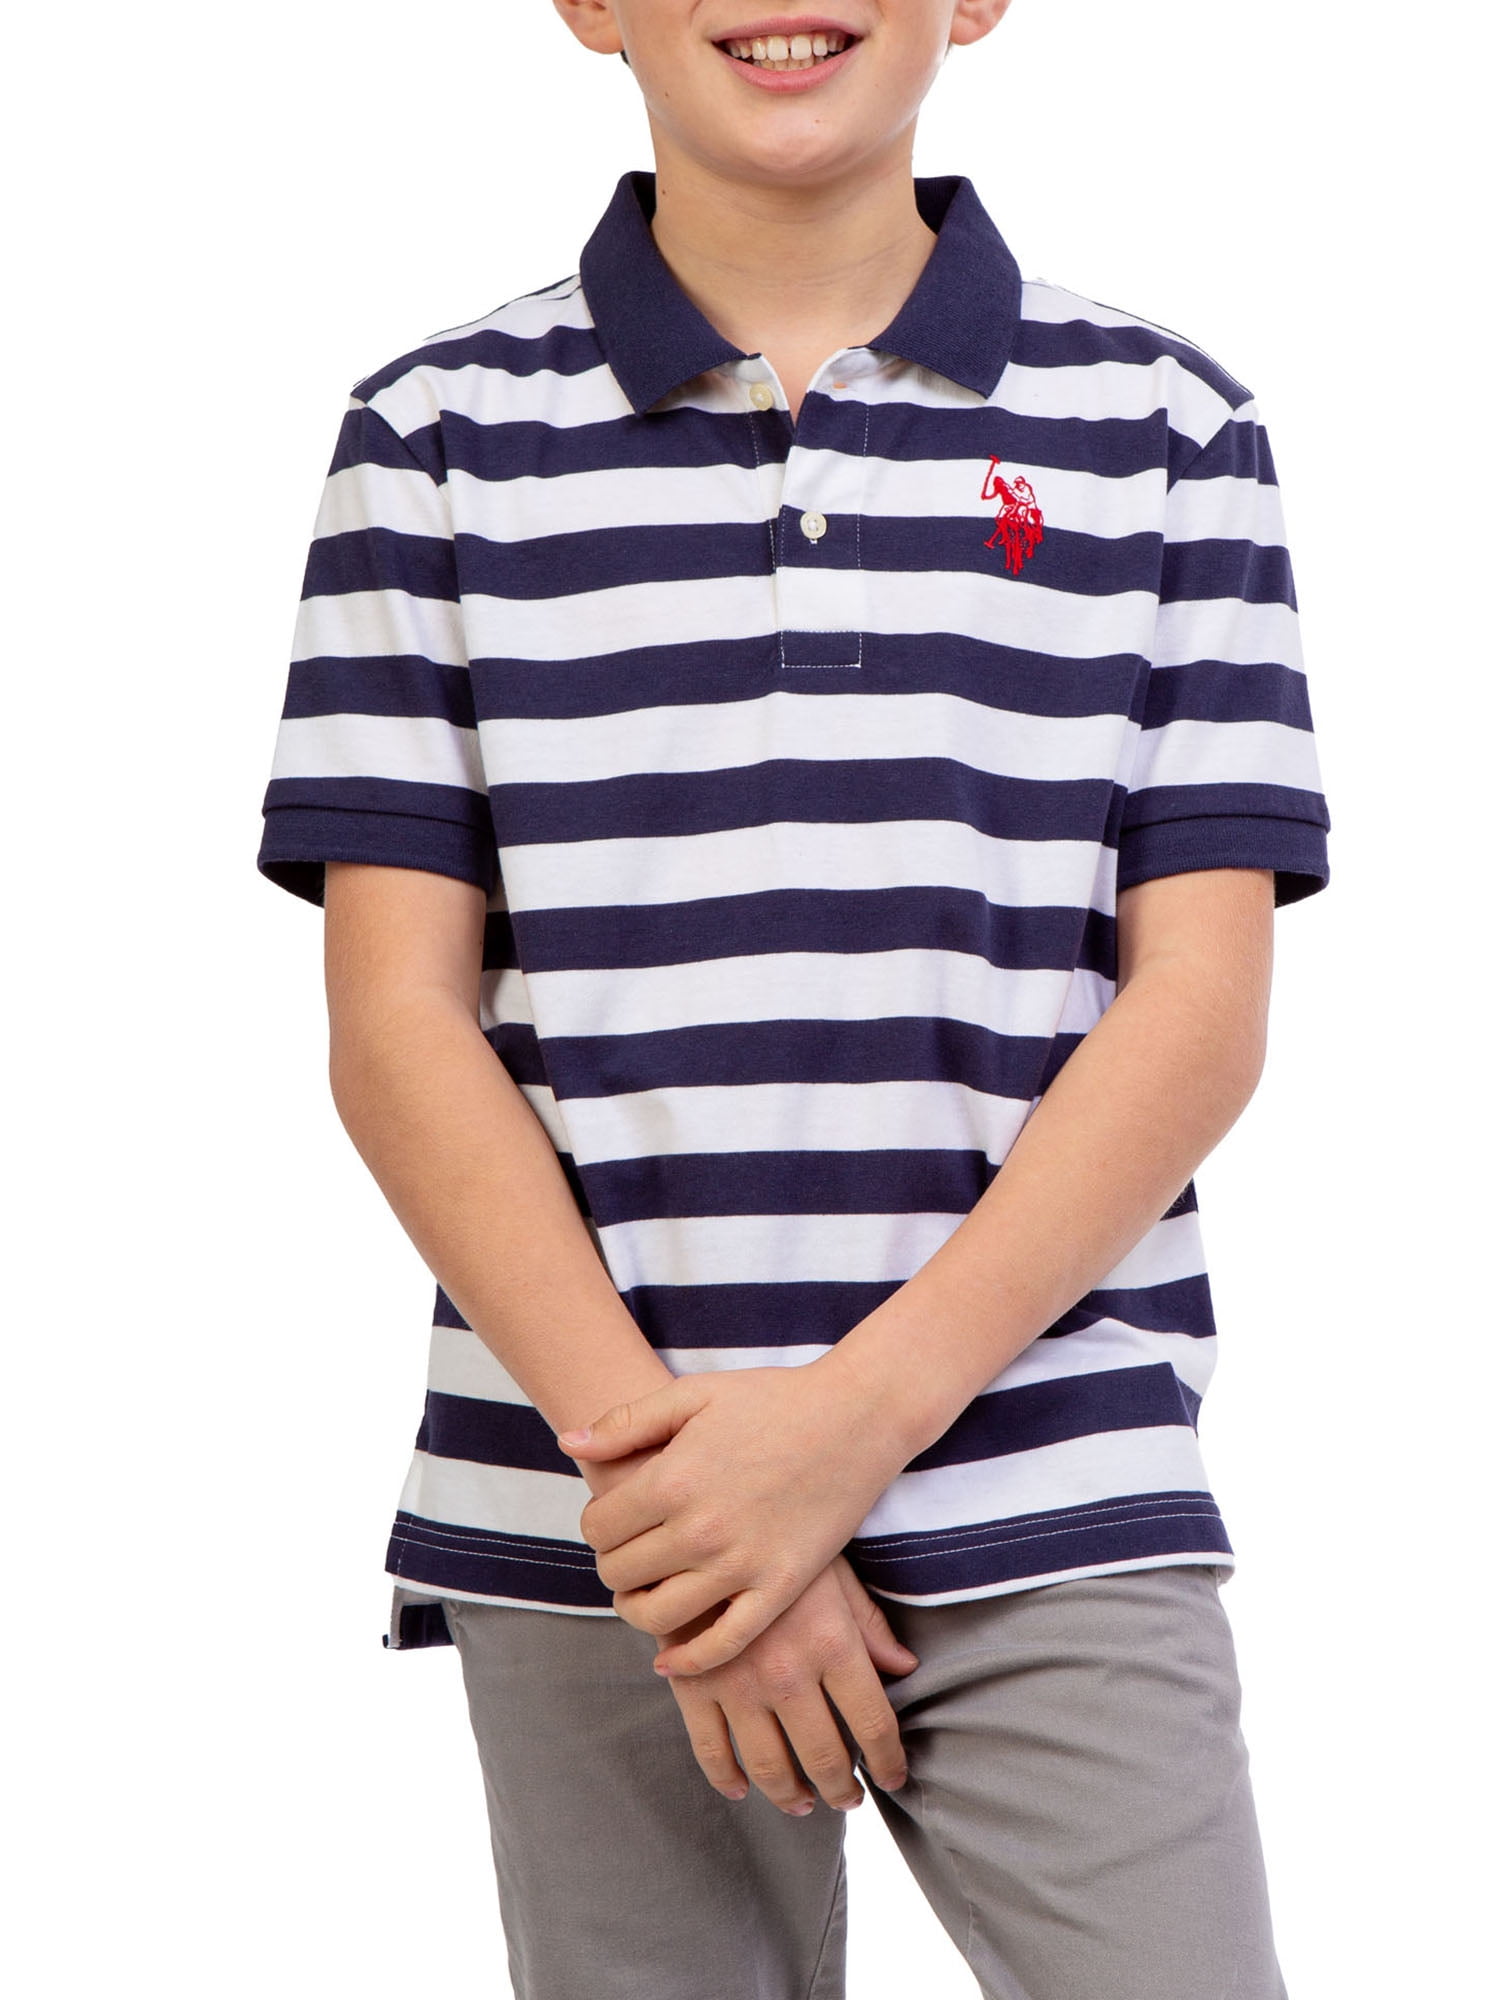 U.S Polo Assn Boys Short Sleeve Striped Woven Shirt